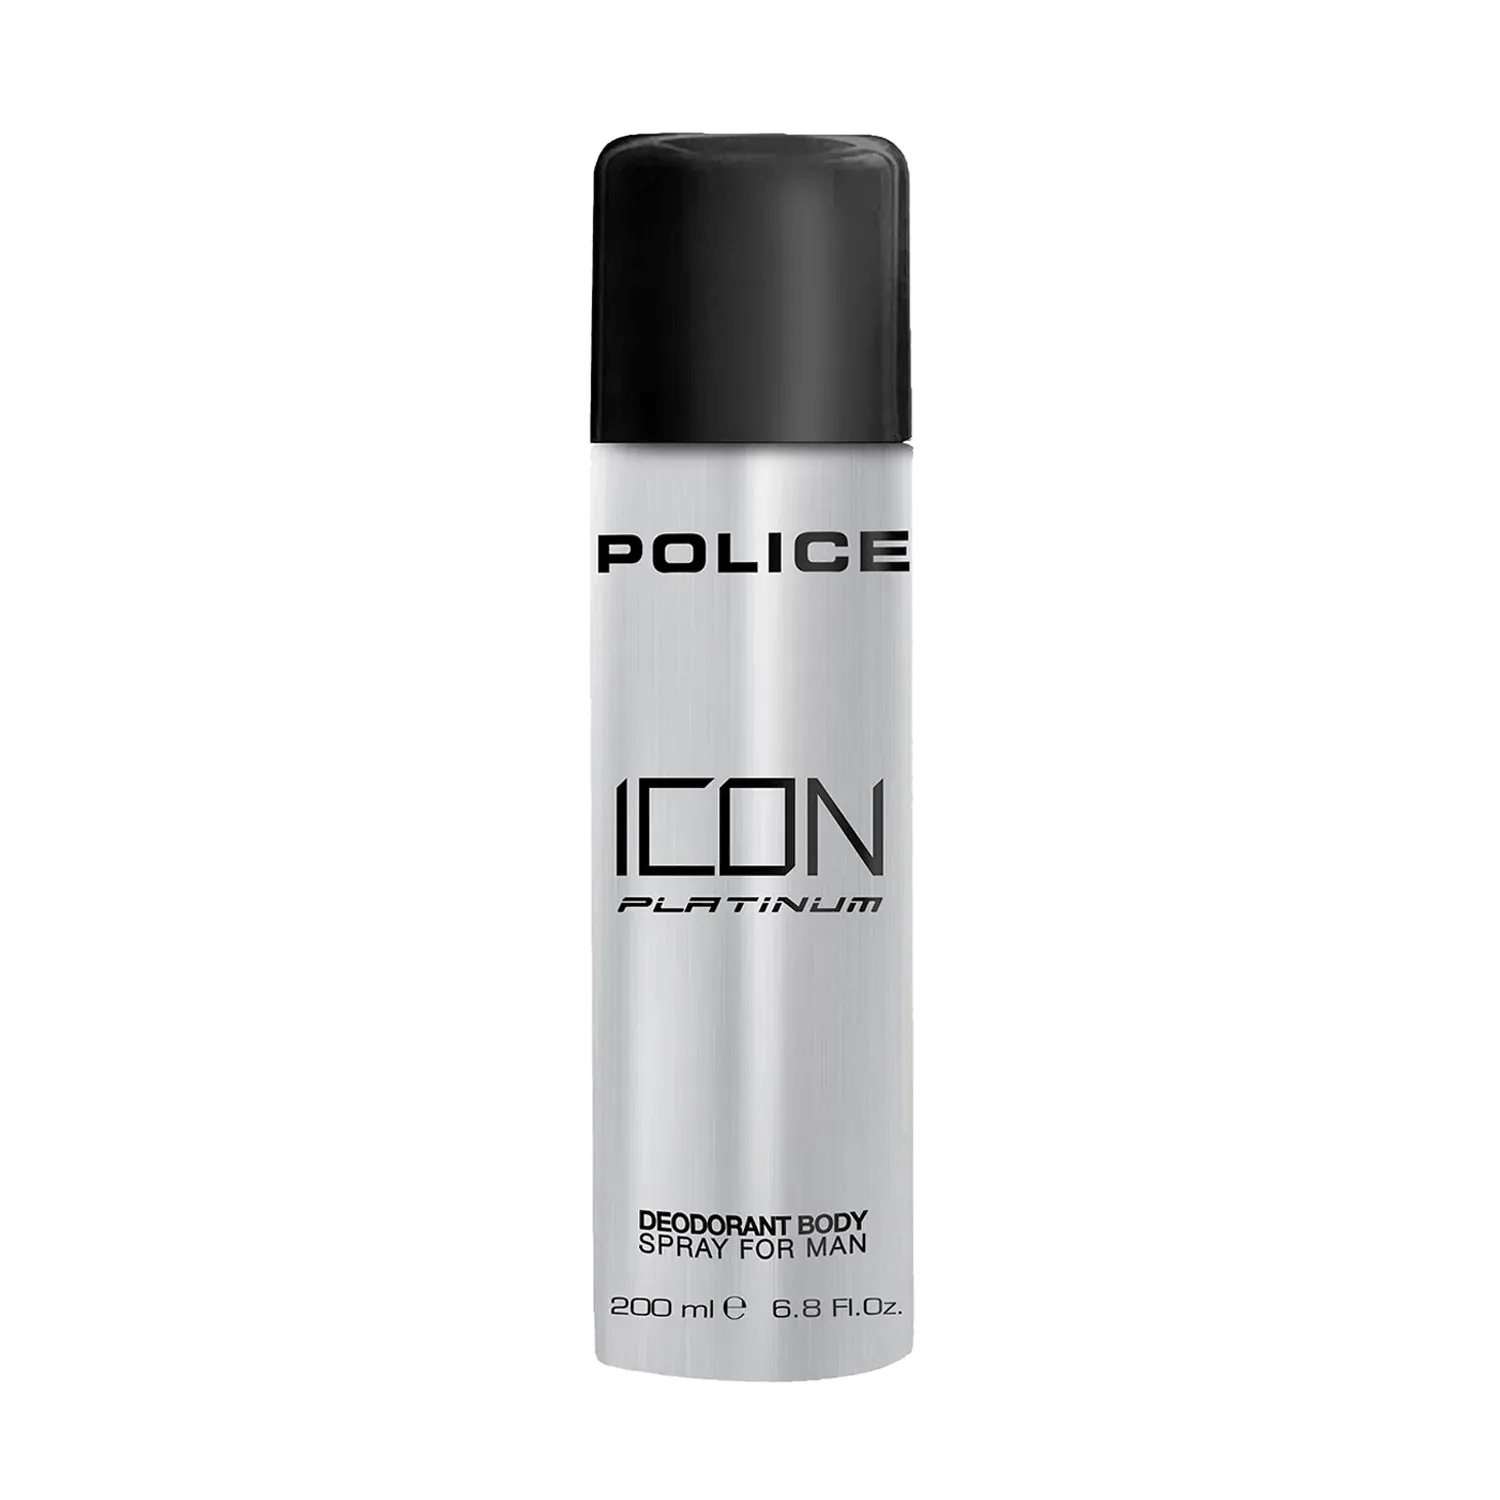 Police | Police Icon Platinum Deodorant Spray (200ml)